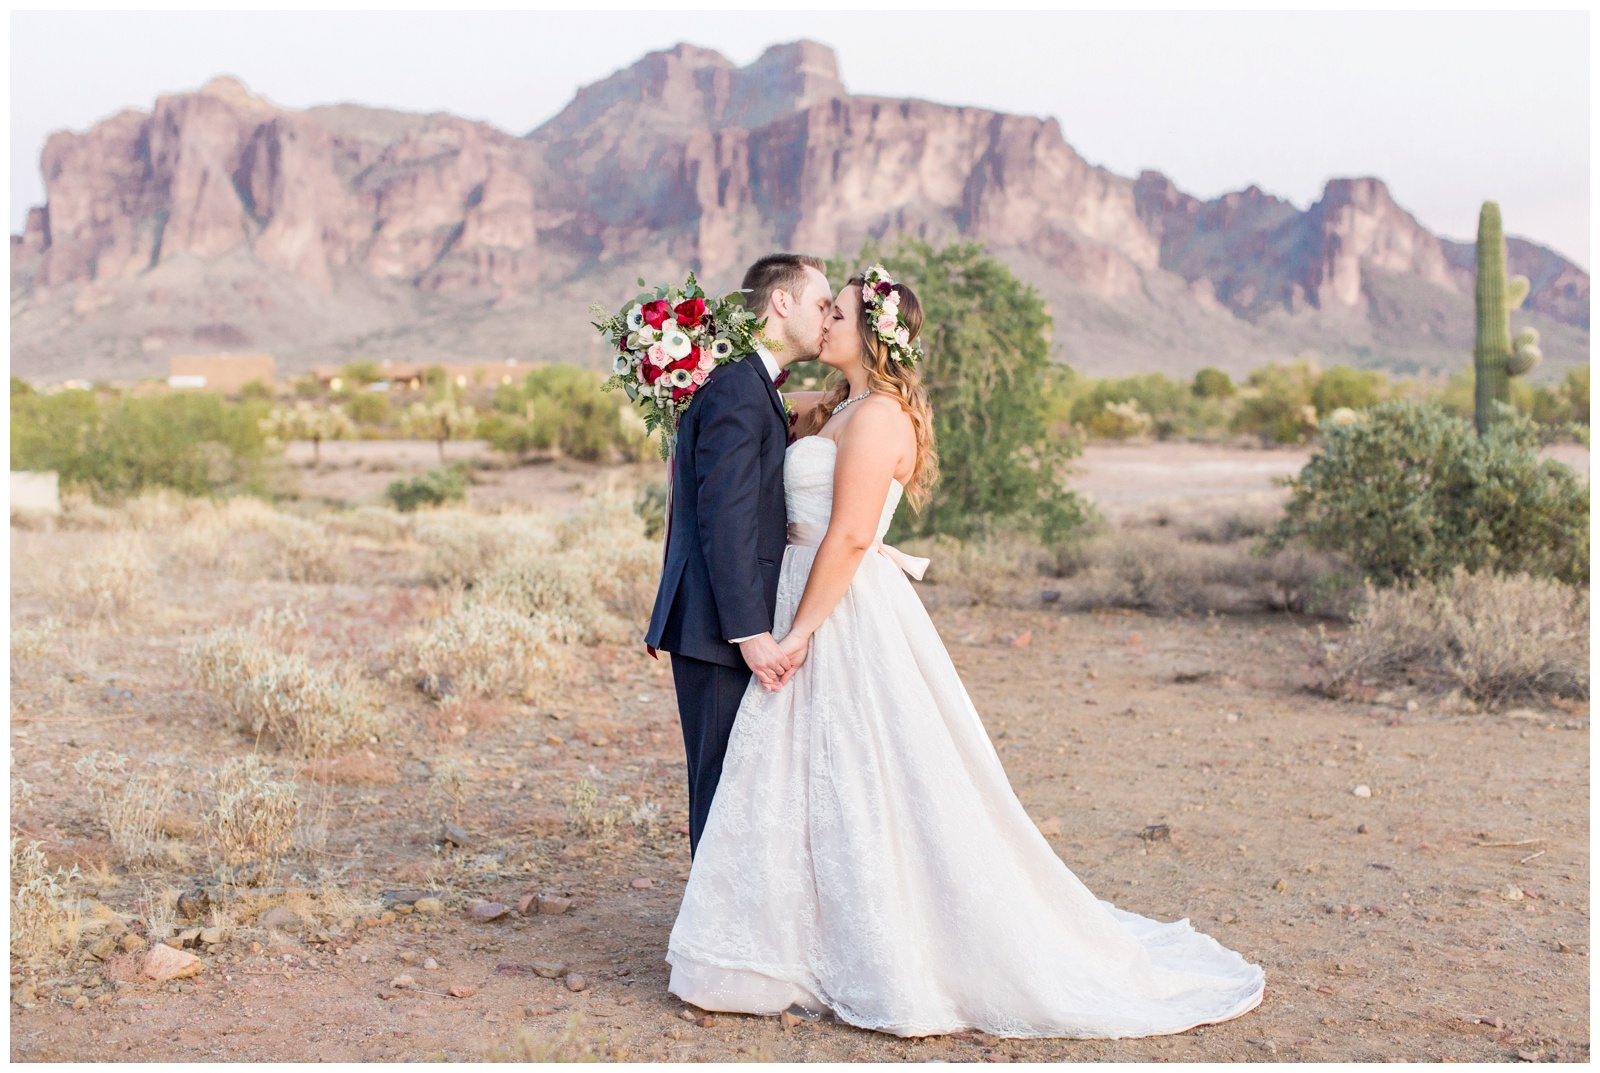 The Paseo Desert wedding photography